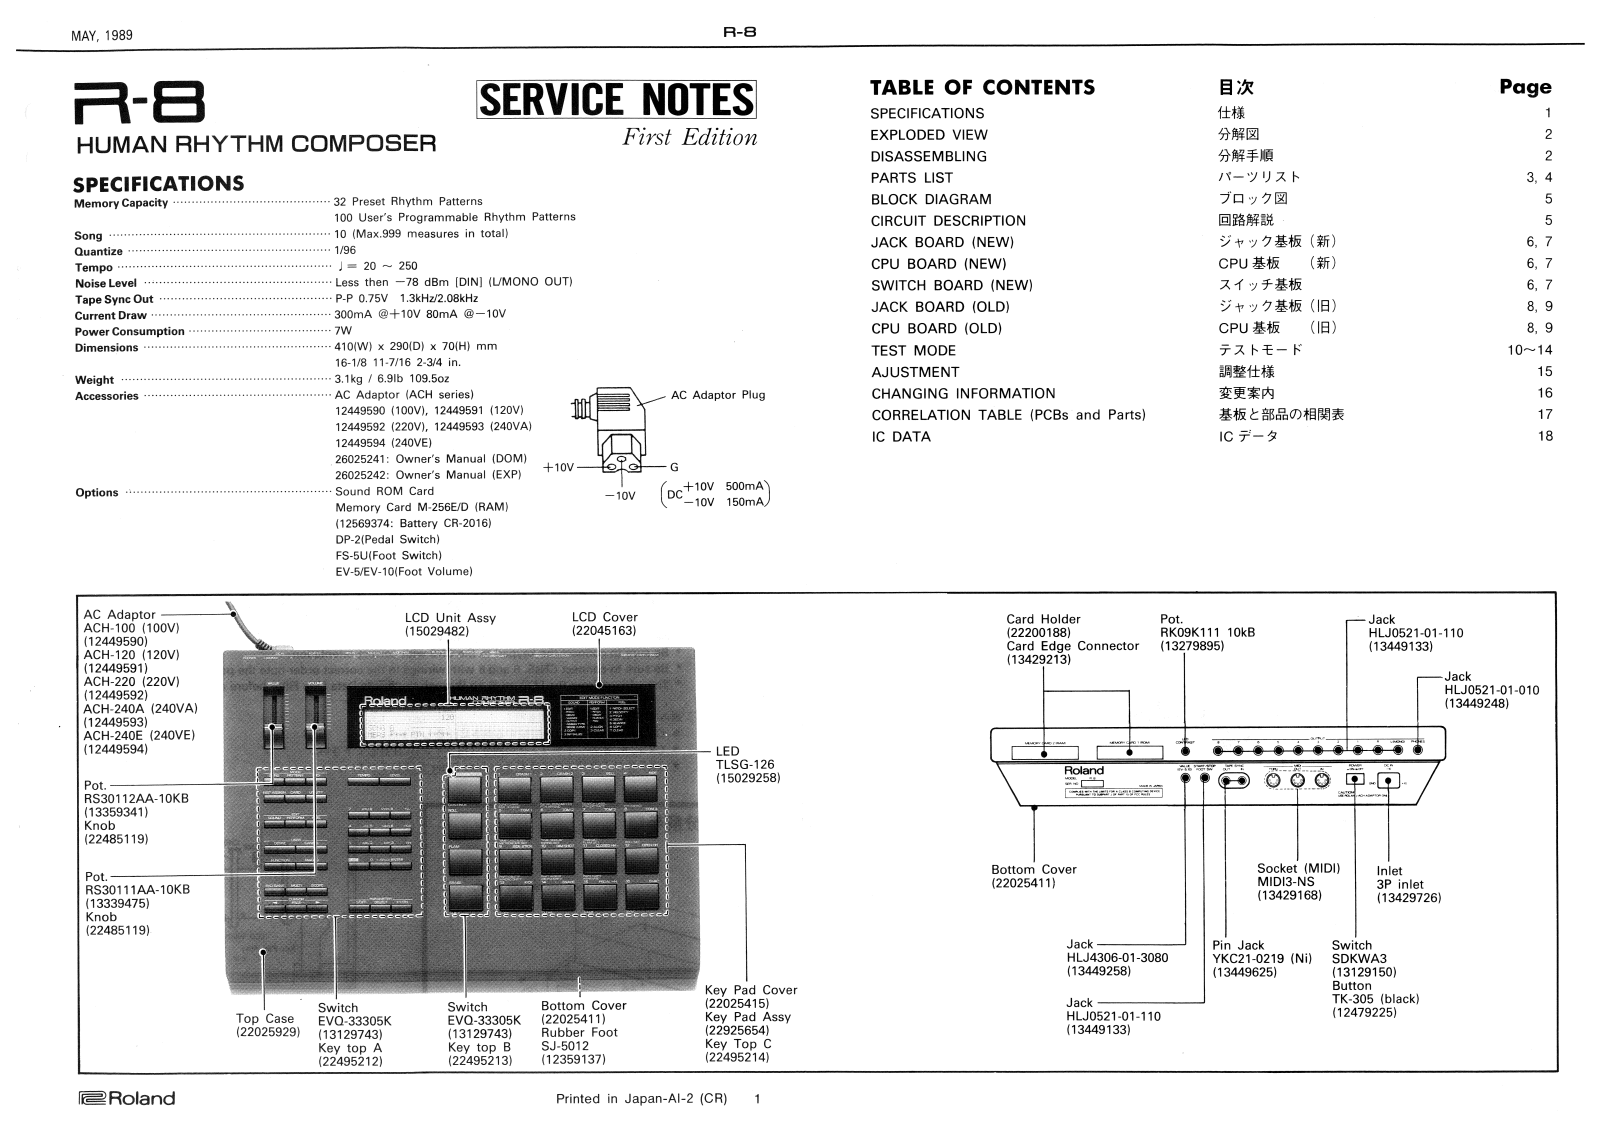 Roland R-8 Service Manual